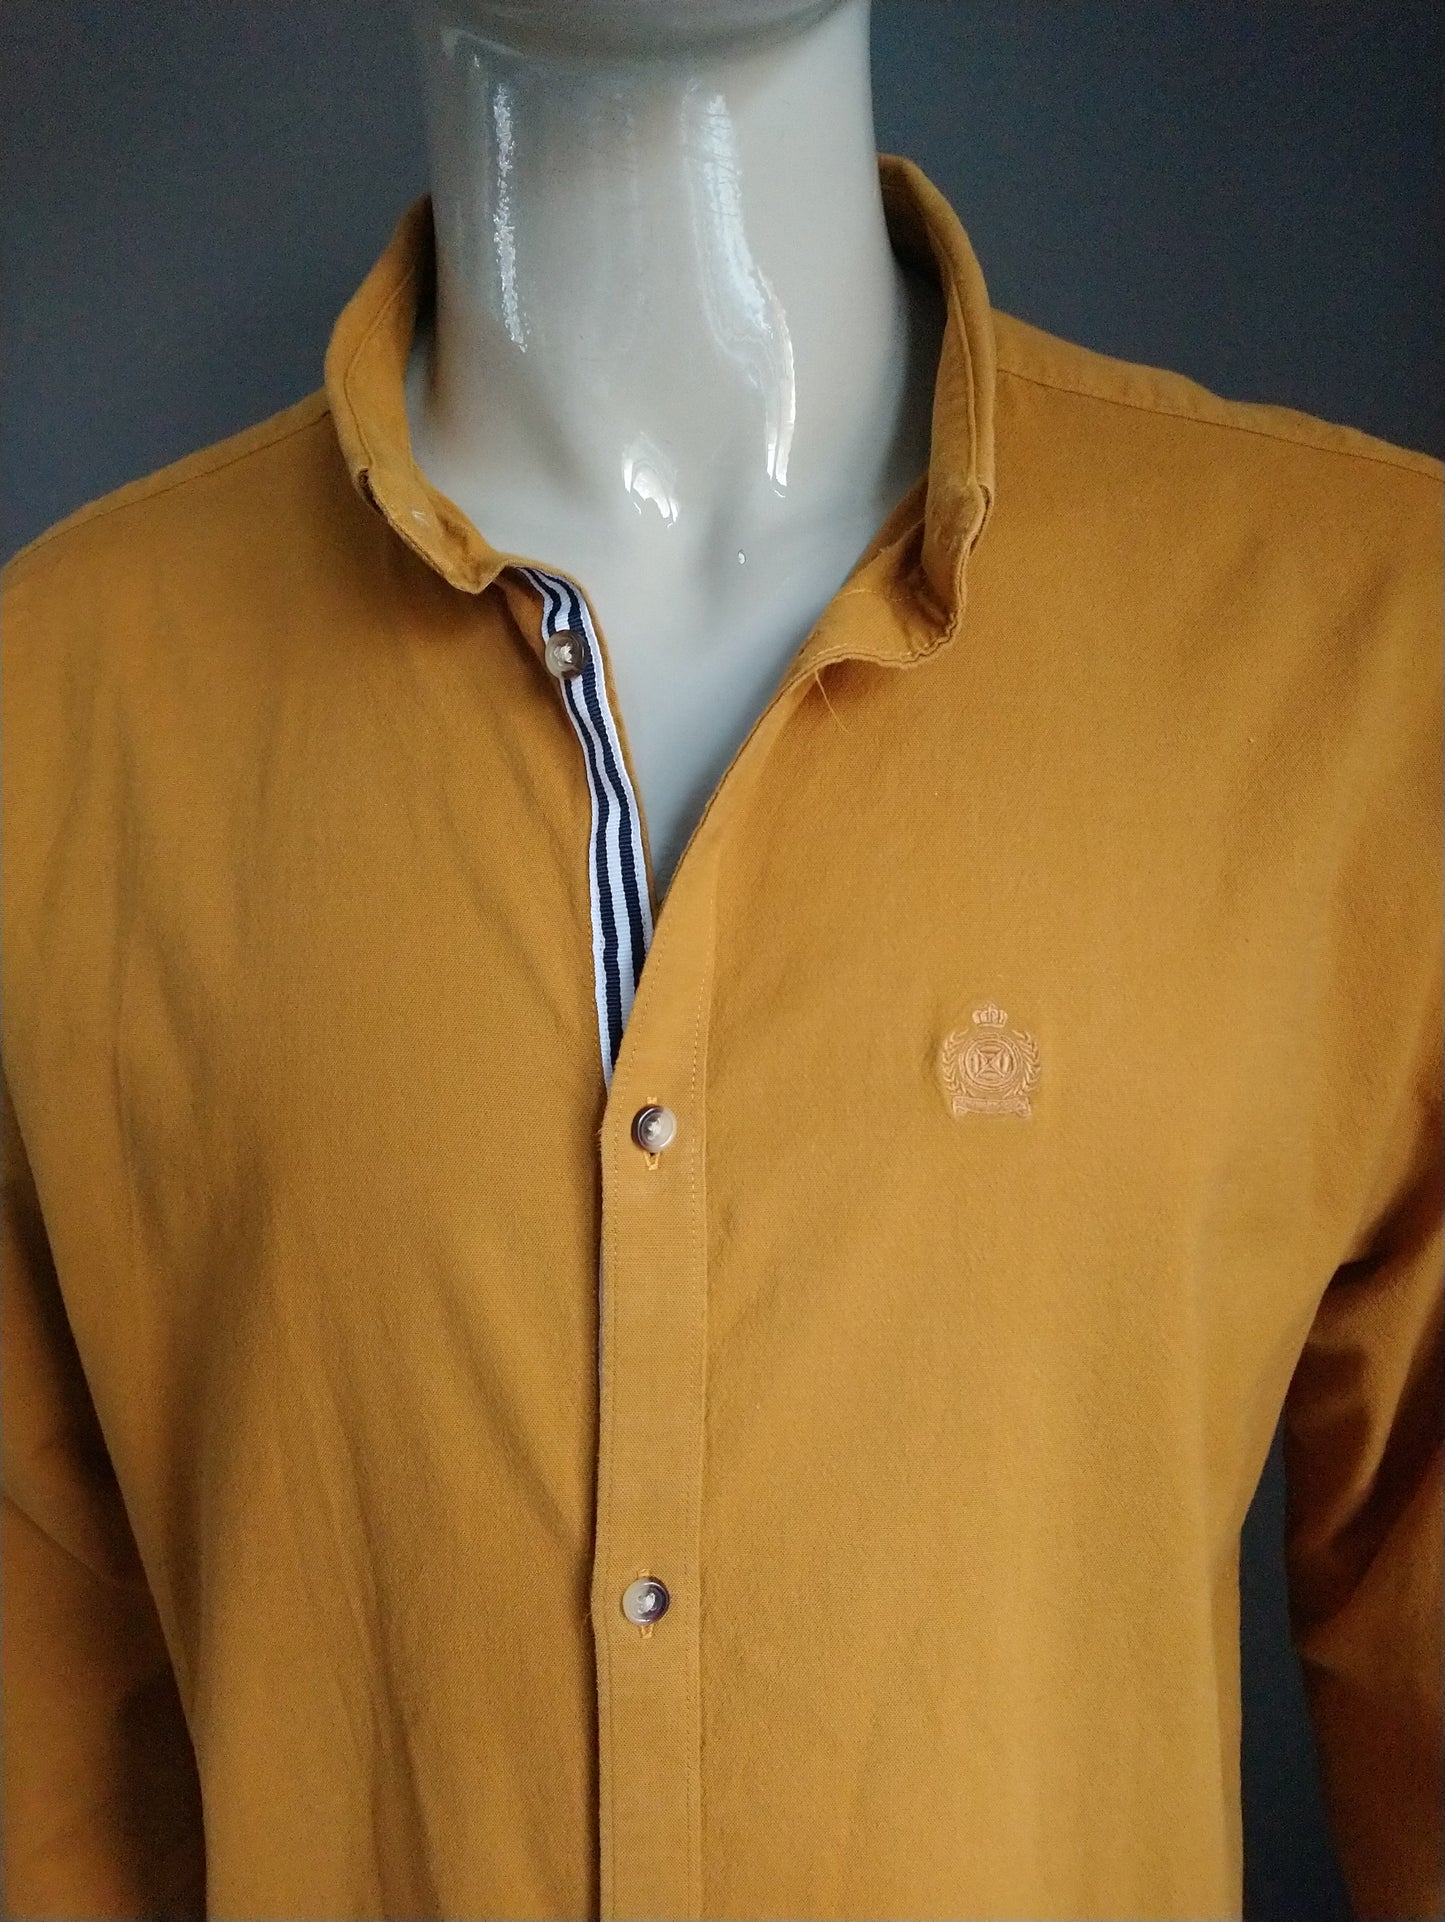 River Island Shirt. Ocher colored yellow. Size XXL / 2XL.